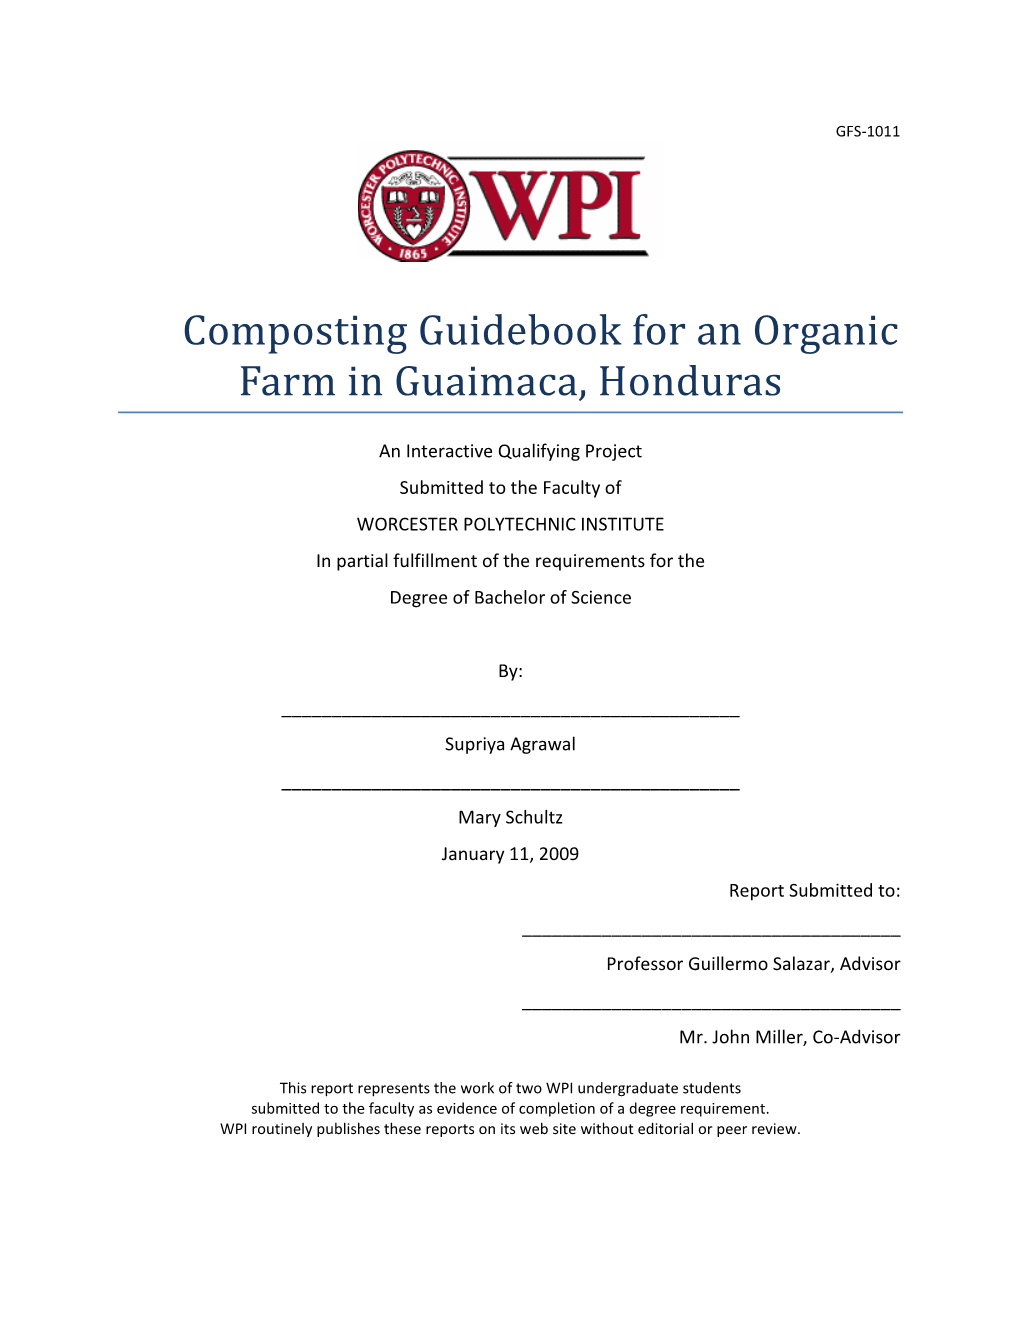 Composting Guidebook for an Organic Farm in Guaimaca, Honduras